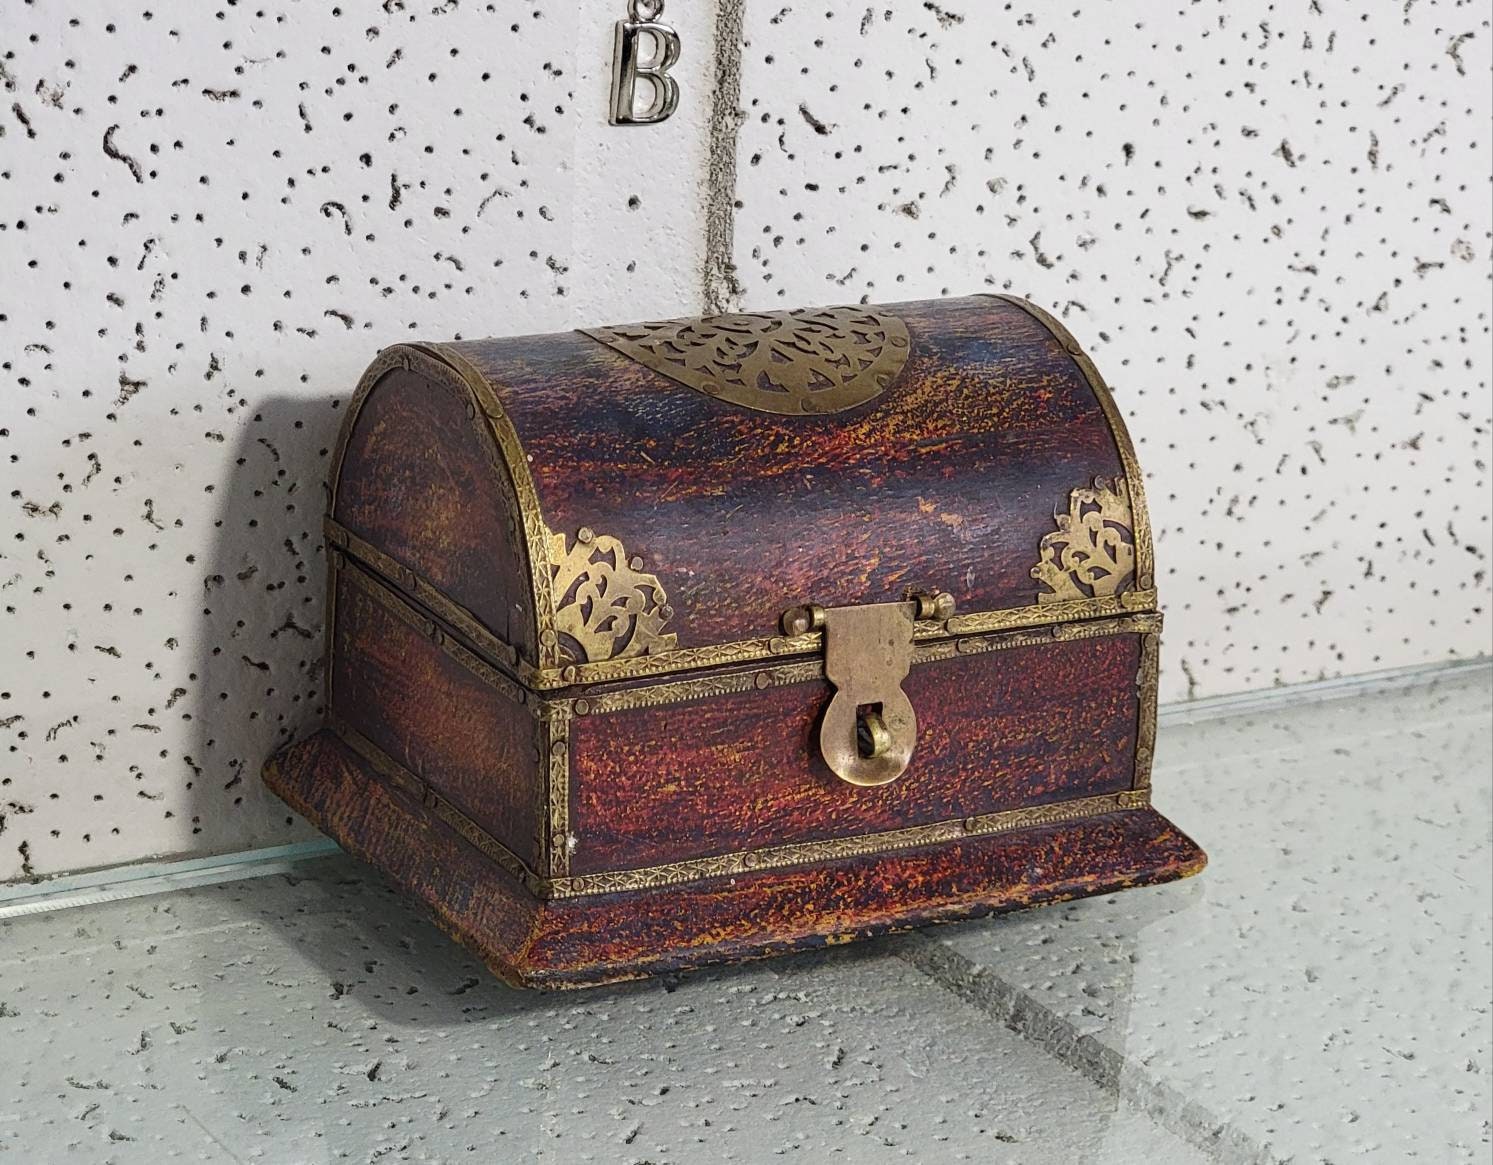 Custom Wooden Storage Box - Relic Wood